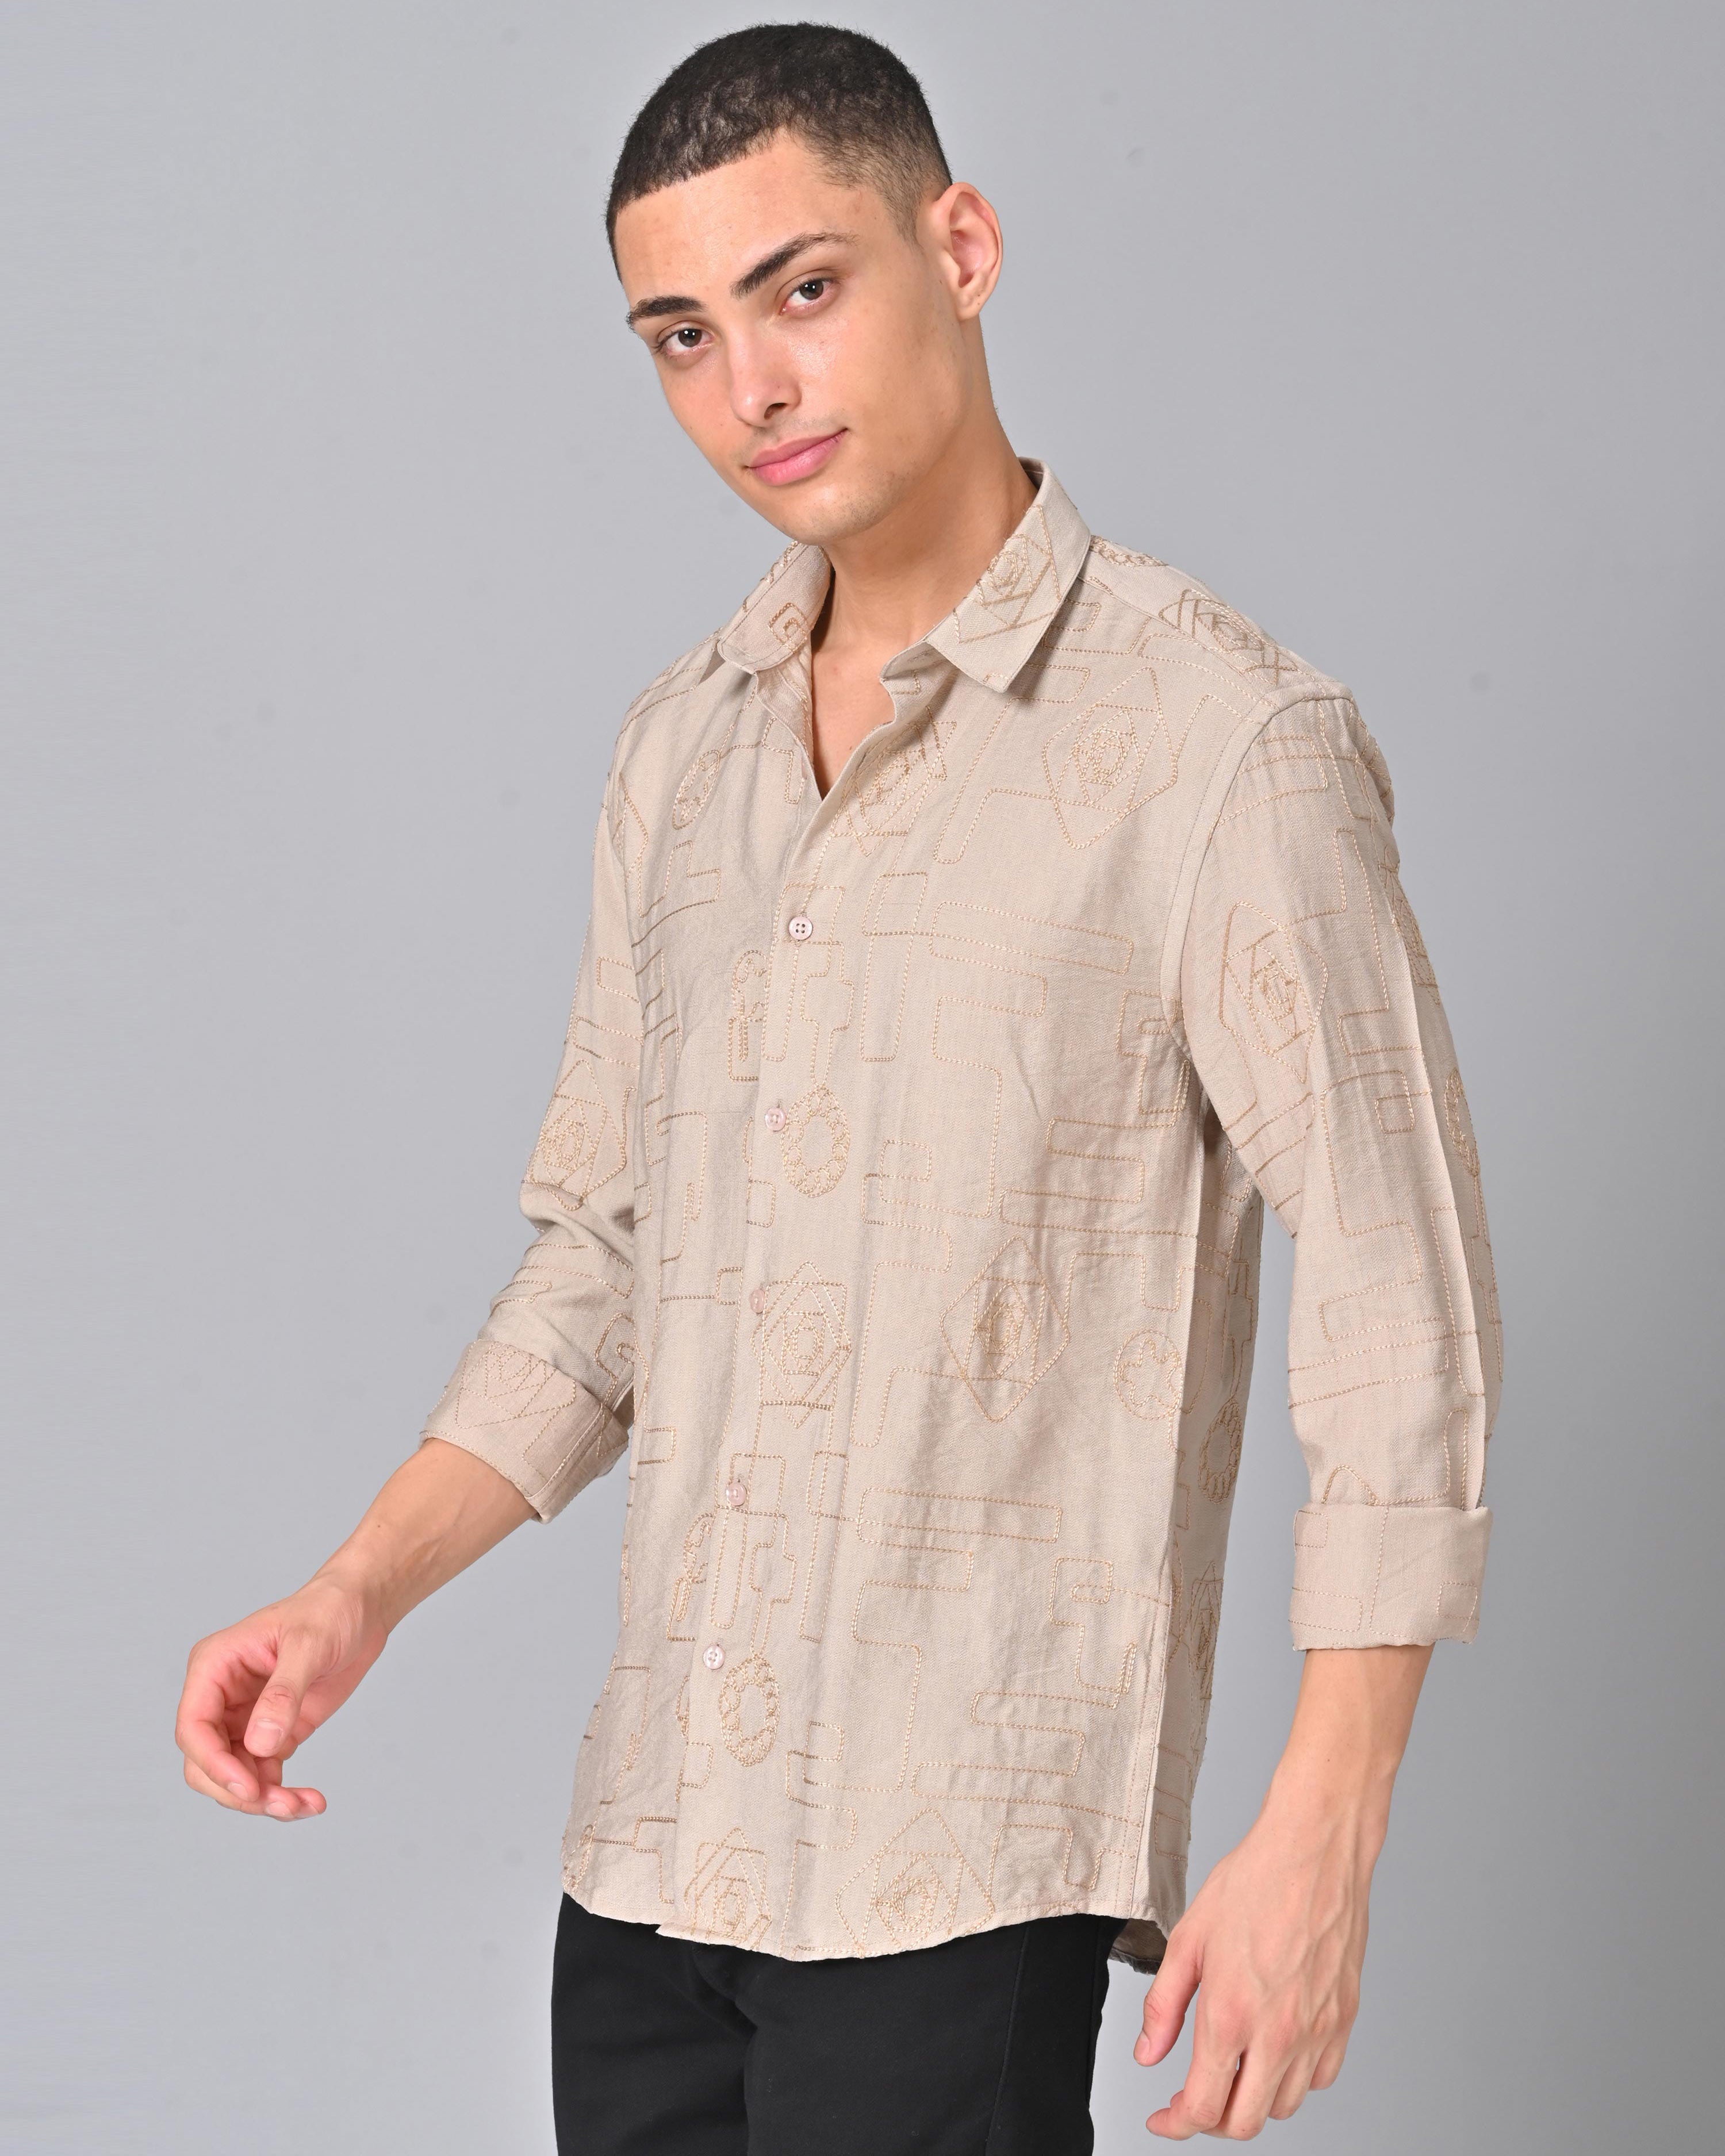 Men's Embroidered Cotton Misty Rose Shirt Online